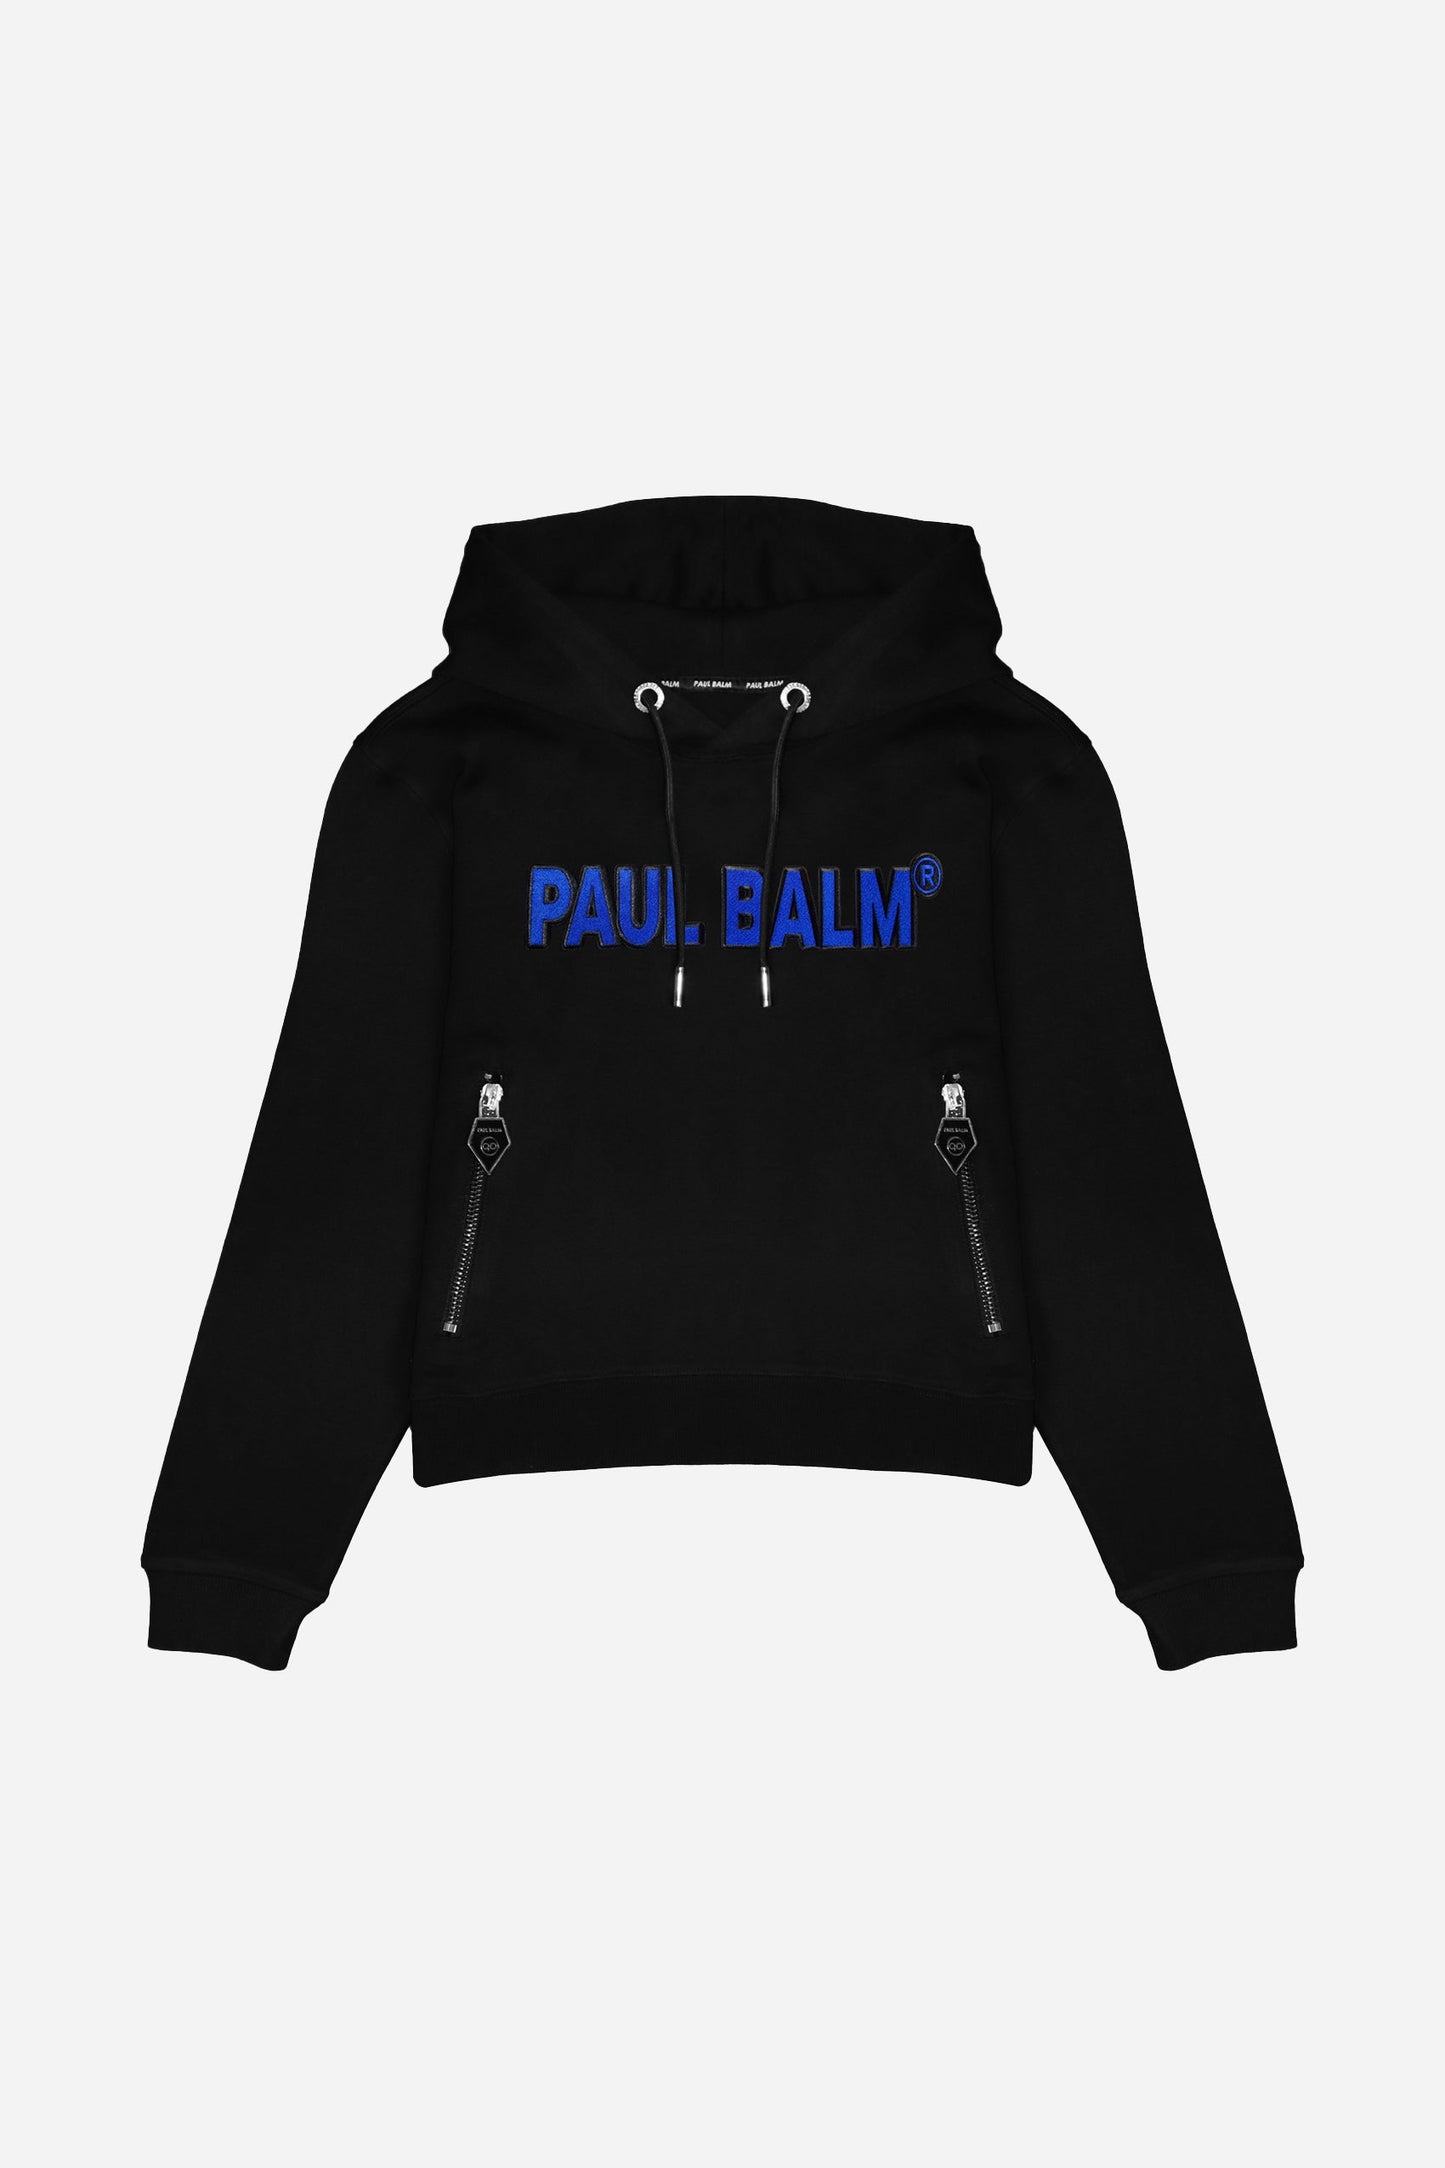 PAUL BALM Embroidery blue Set